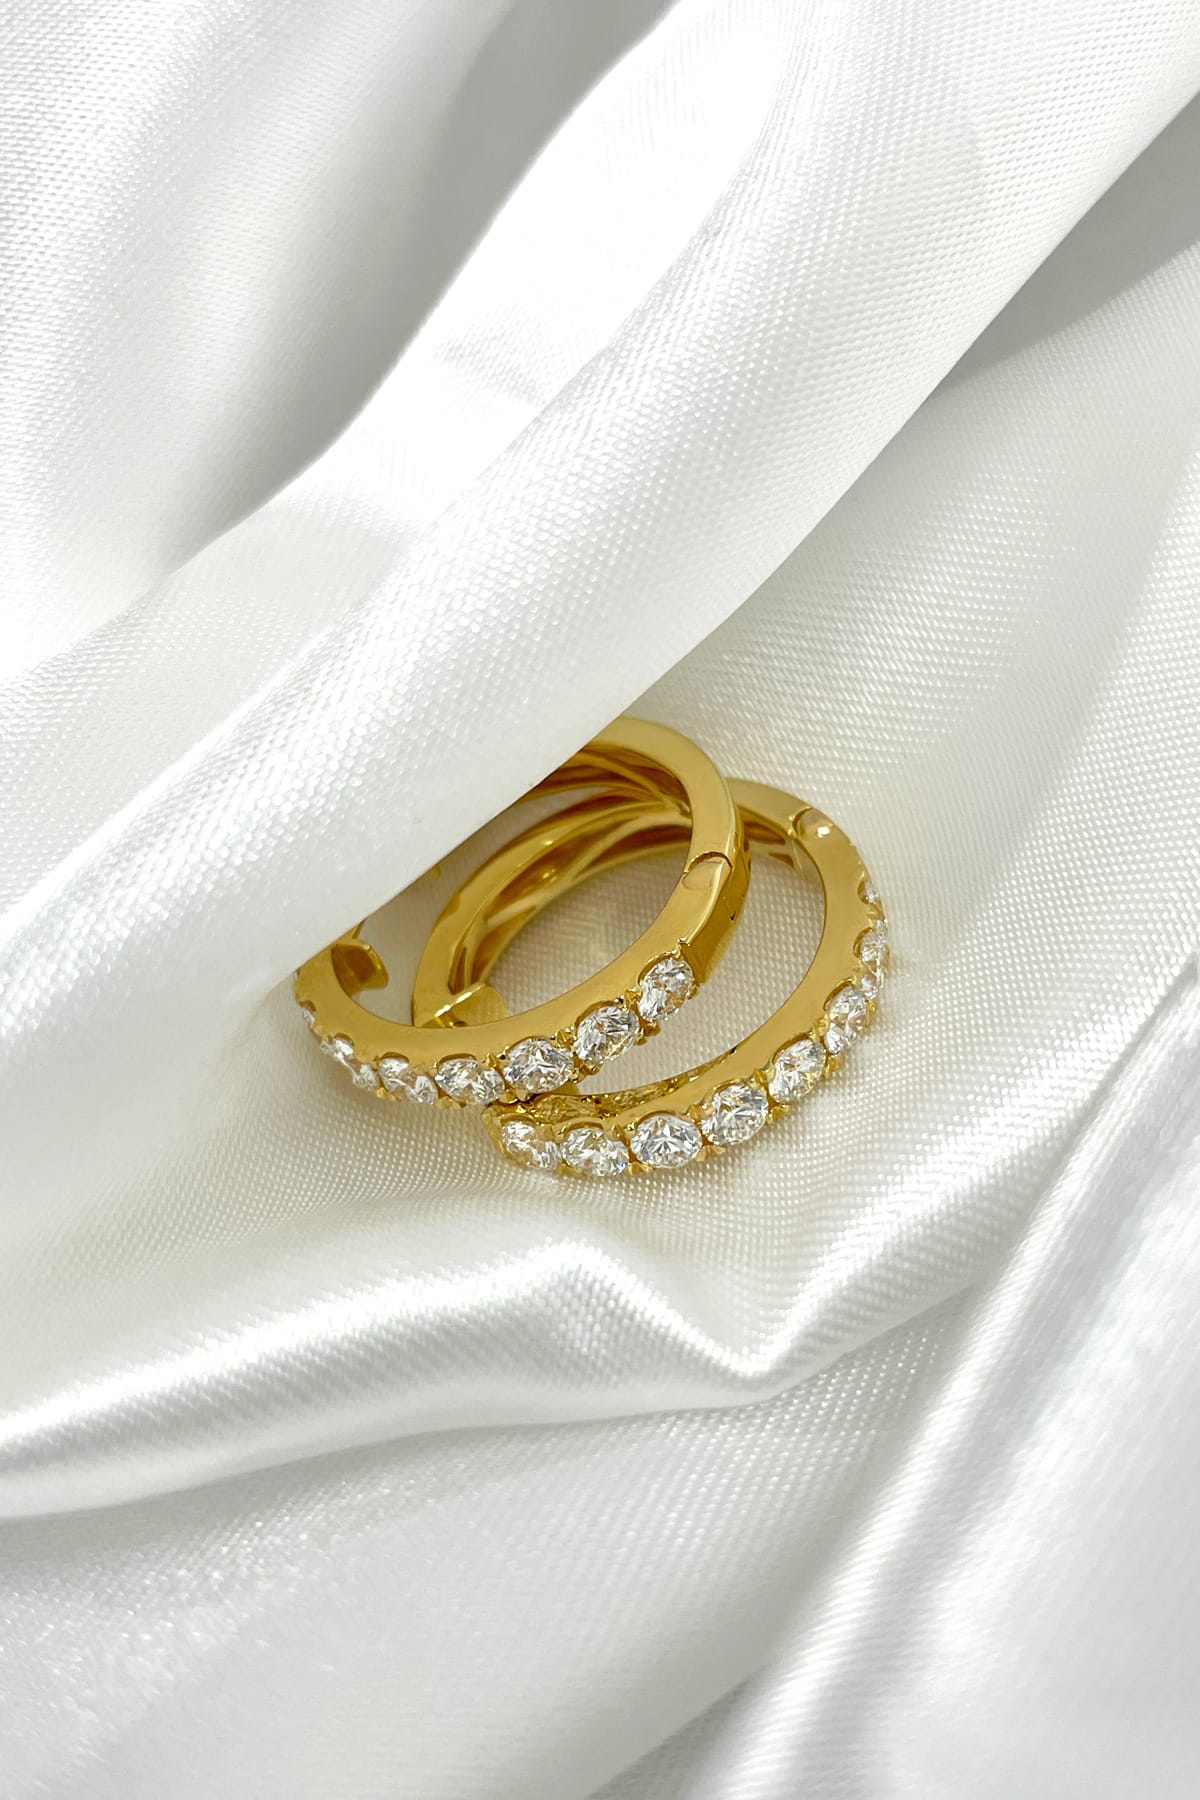 18 Carat Yellow Gold Diamond Set Hoop Earrings available at LeGassick Diamonds and Jewellery Gold Coast, Australia.